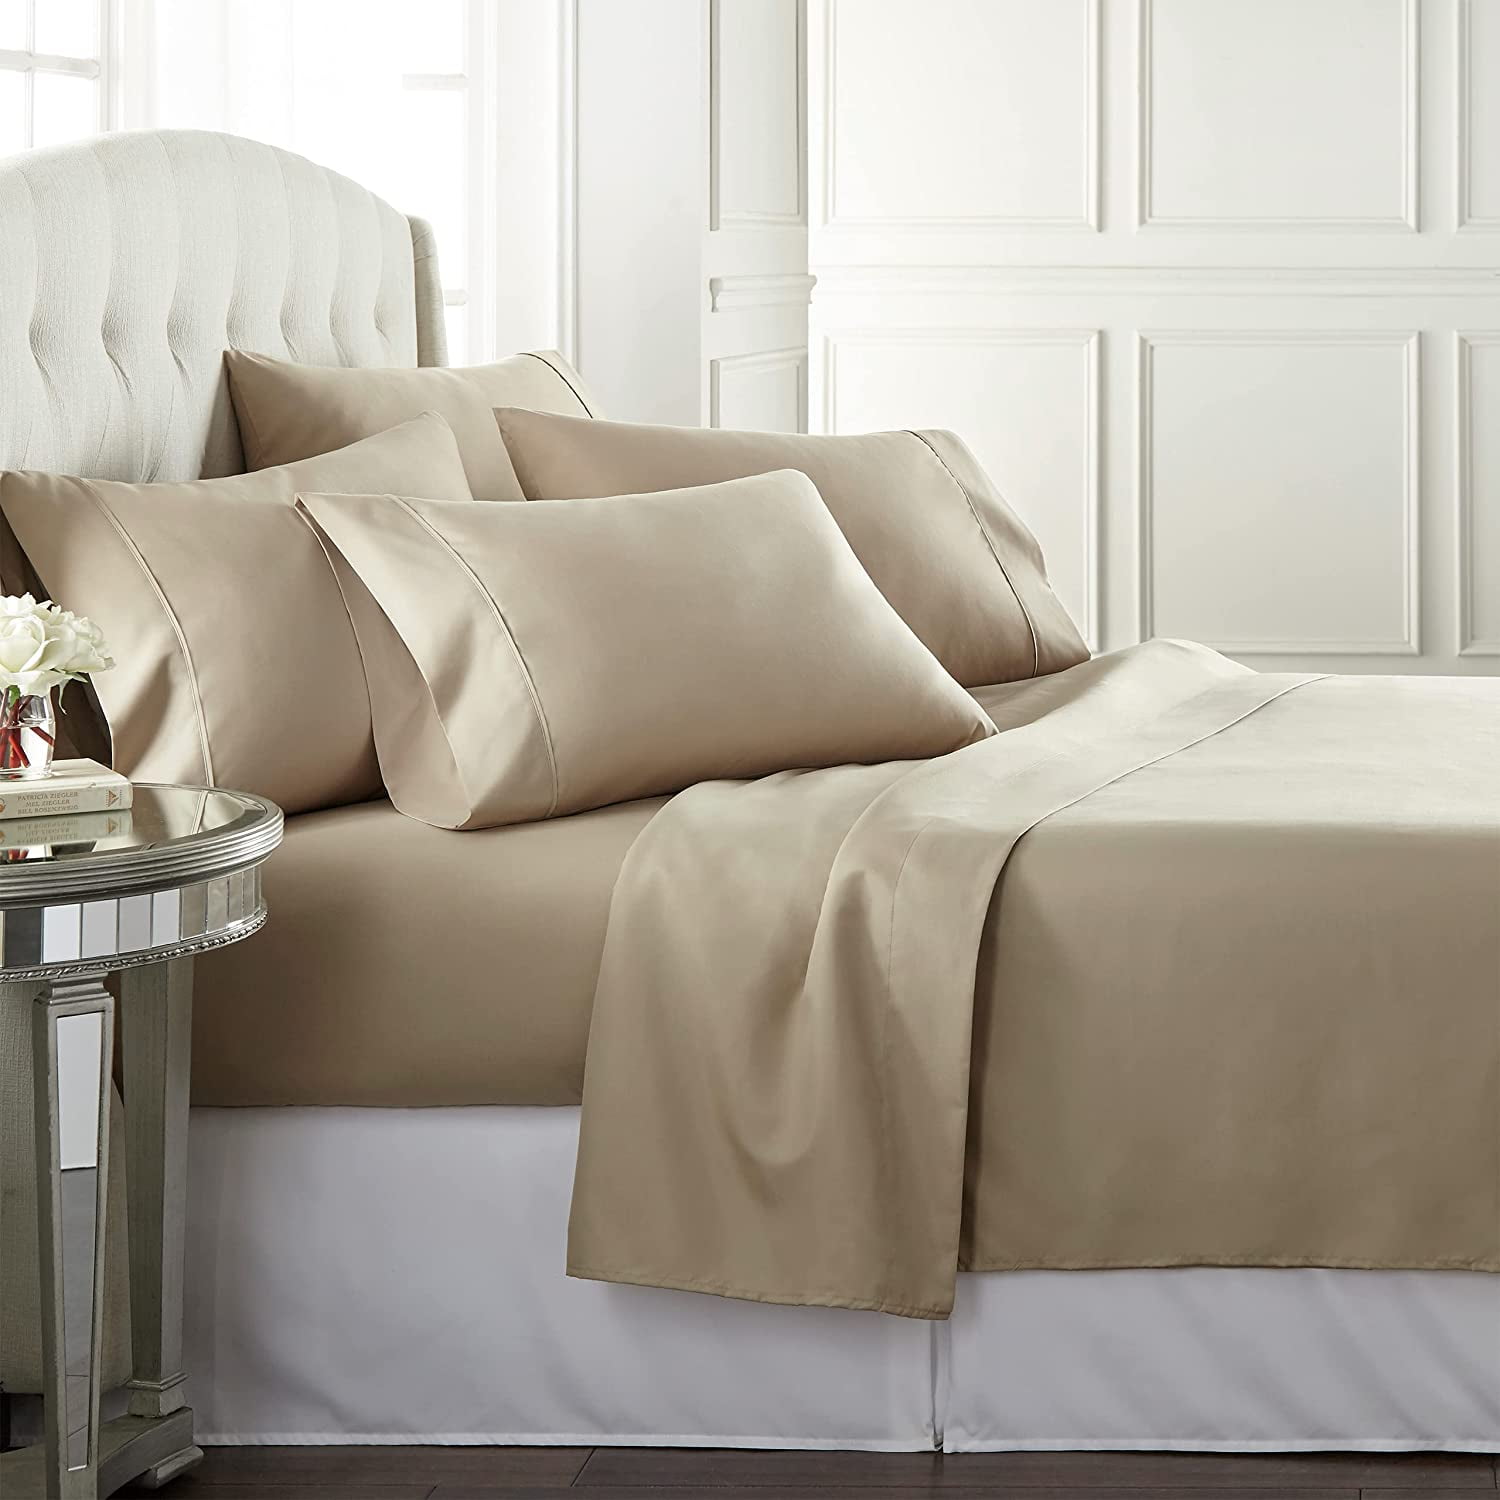 Hotel Luxury Pillowcase 1800 Count 4 Pcs Deep Pocket Bed Sheet Set Sheets R1 